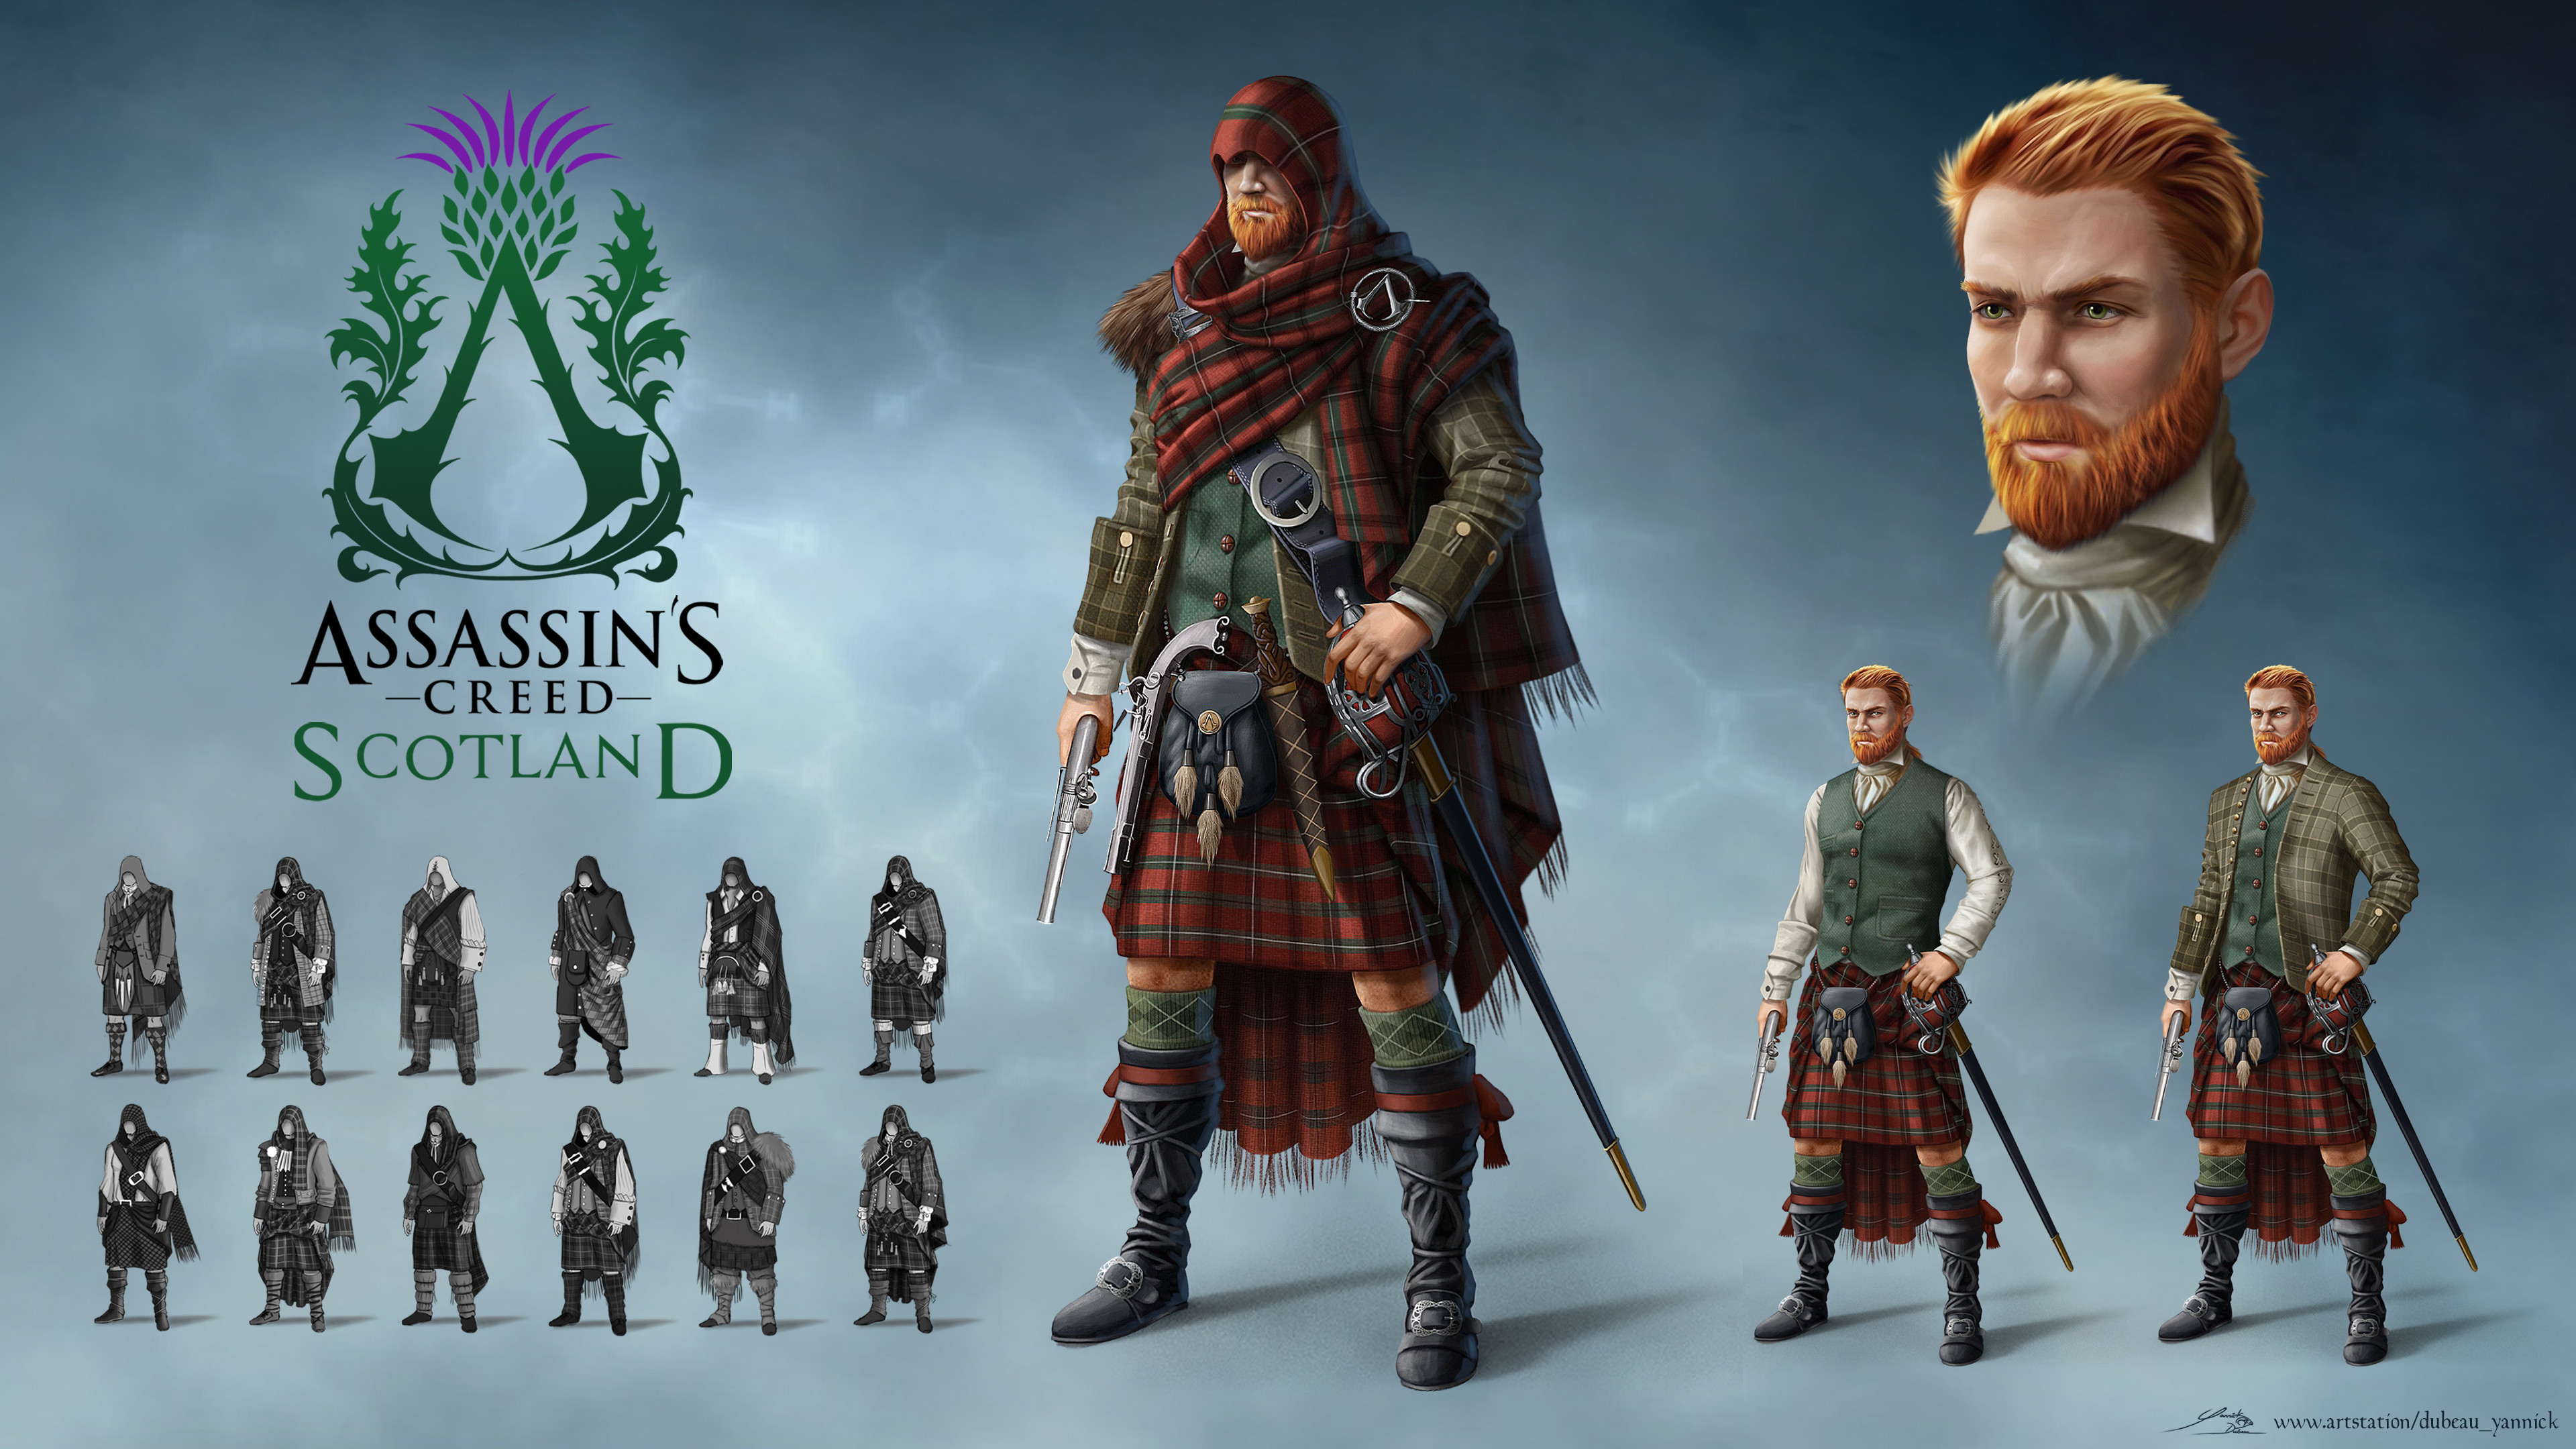 Scotland, Assassin's Creed Wiki